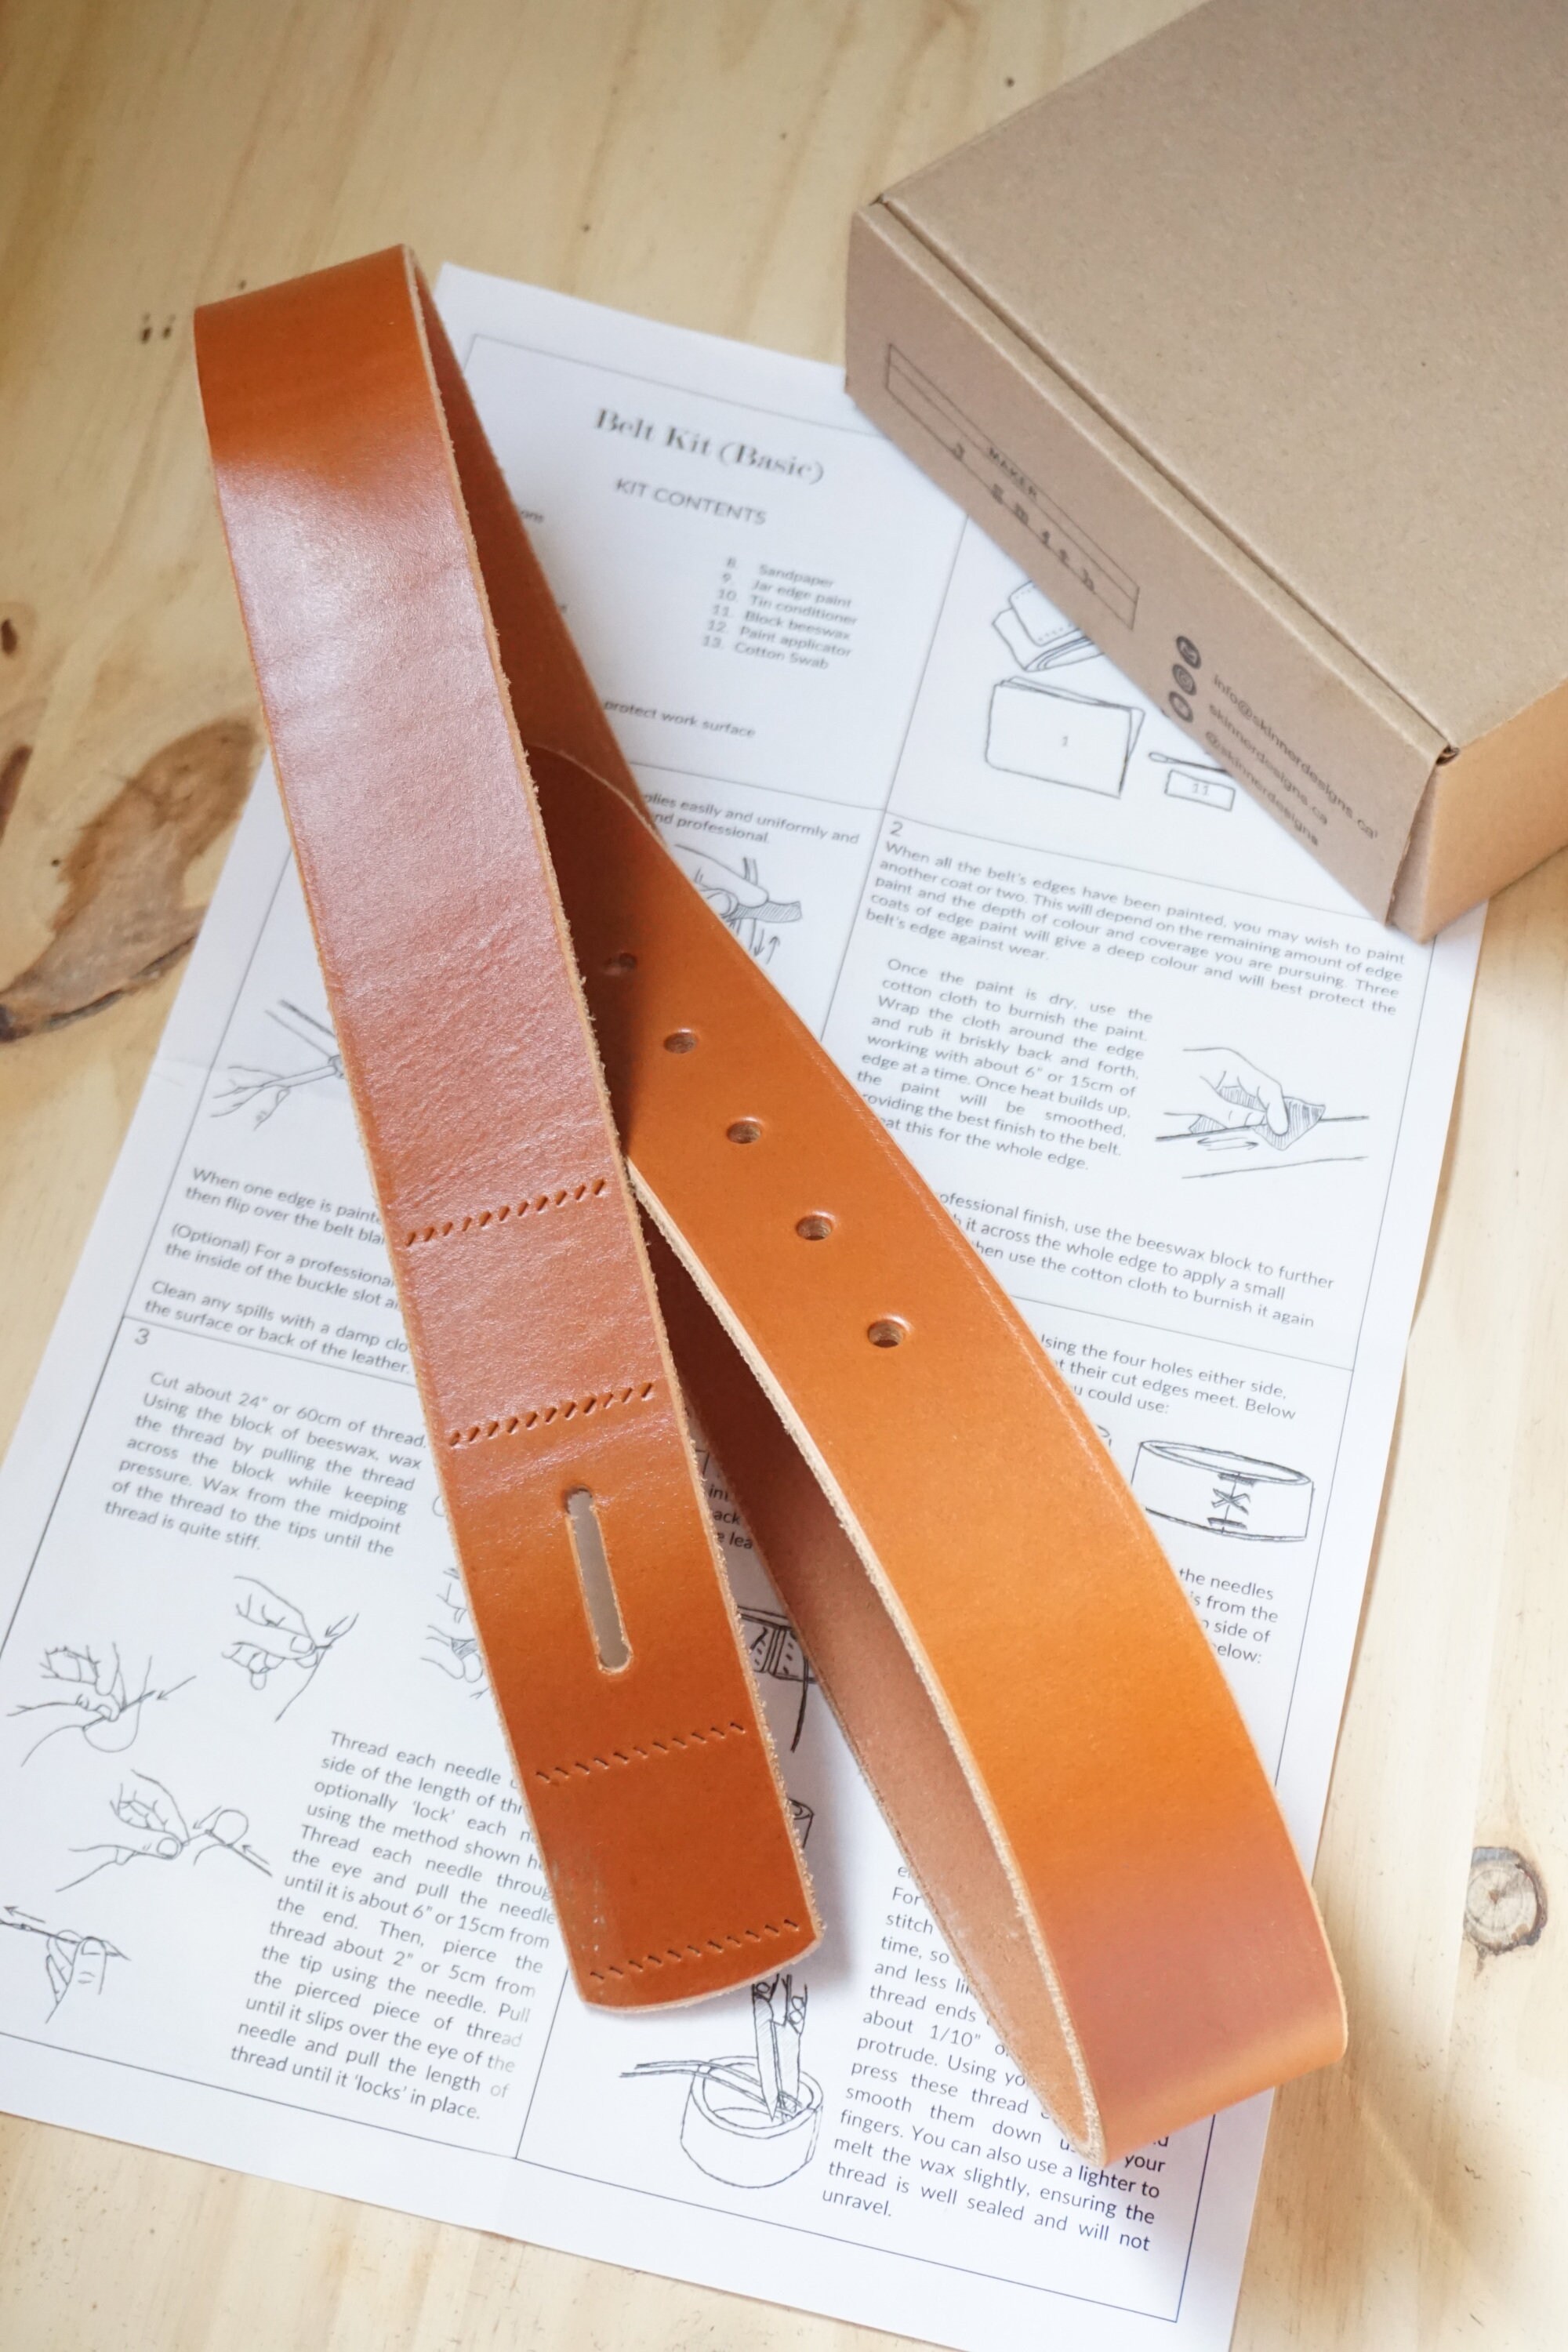 Premium Leather Belt Kit (Intermediate) – Skinner Designs